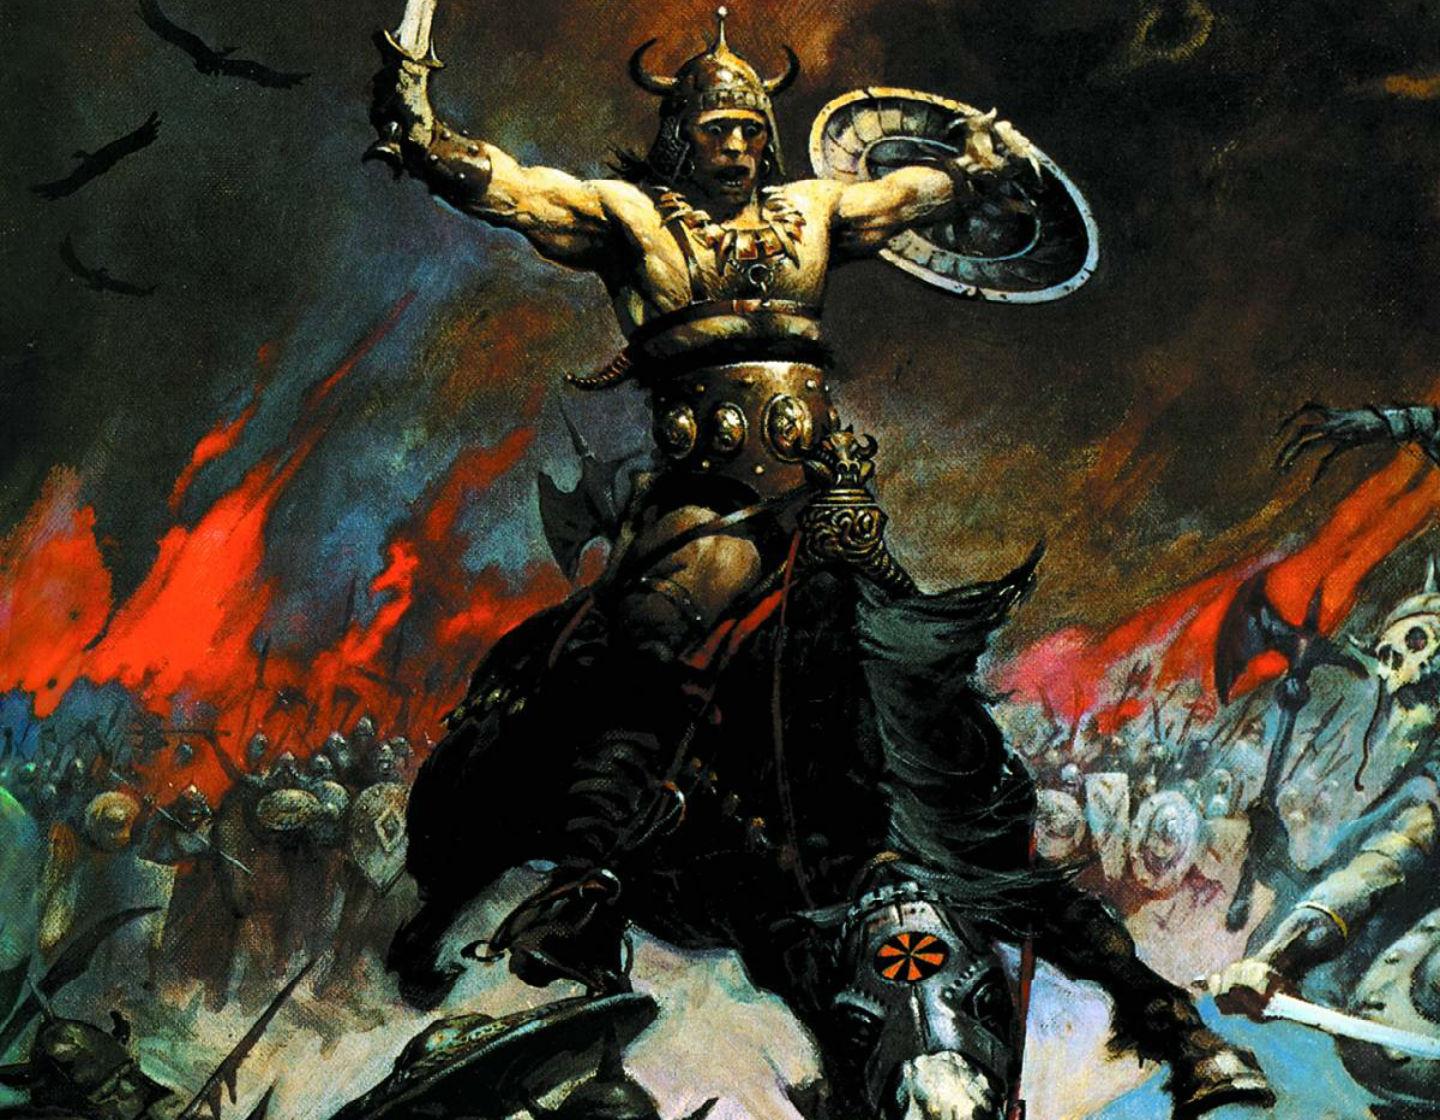 Create comics meme conan Conan the barbarian world Conan the barbarian  fan art Wallpaper  Comics  Memearsenalcom